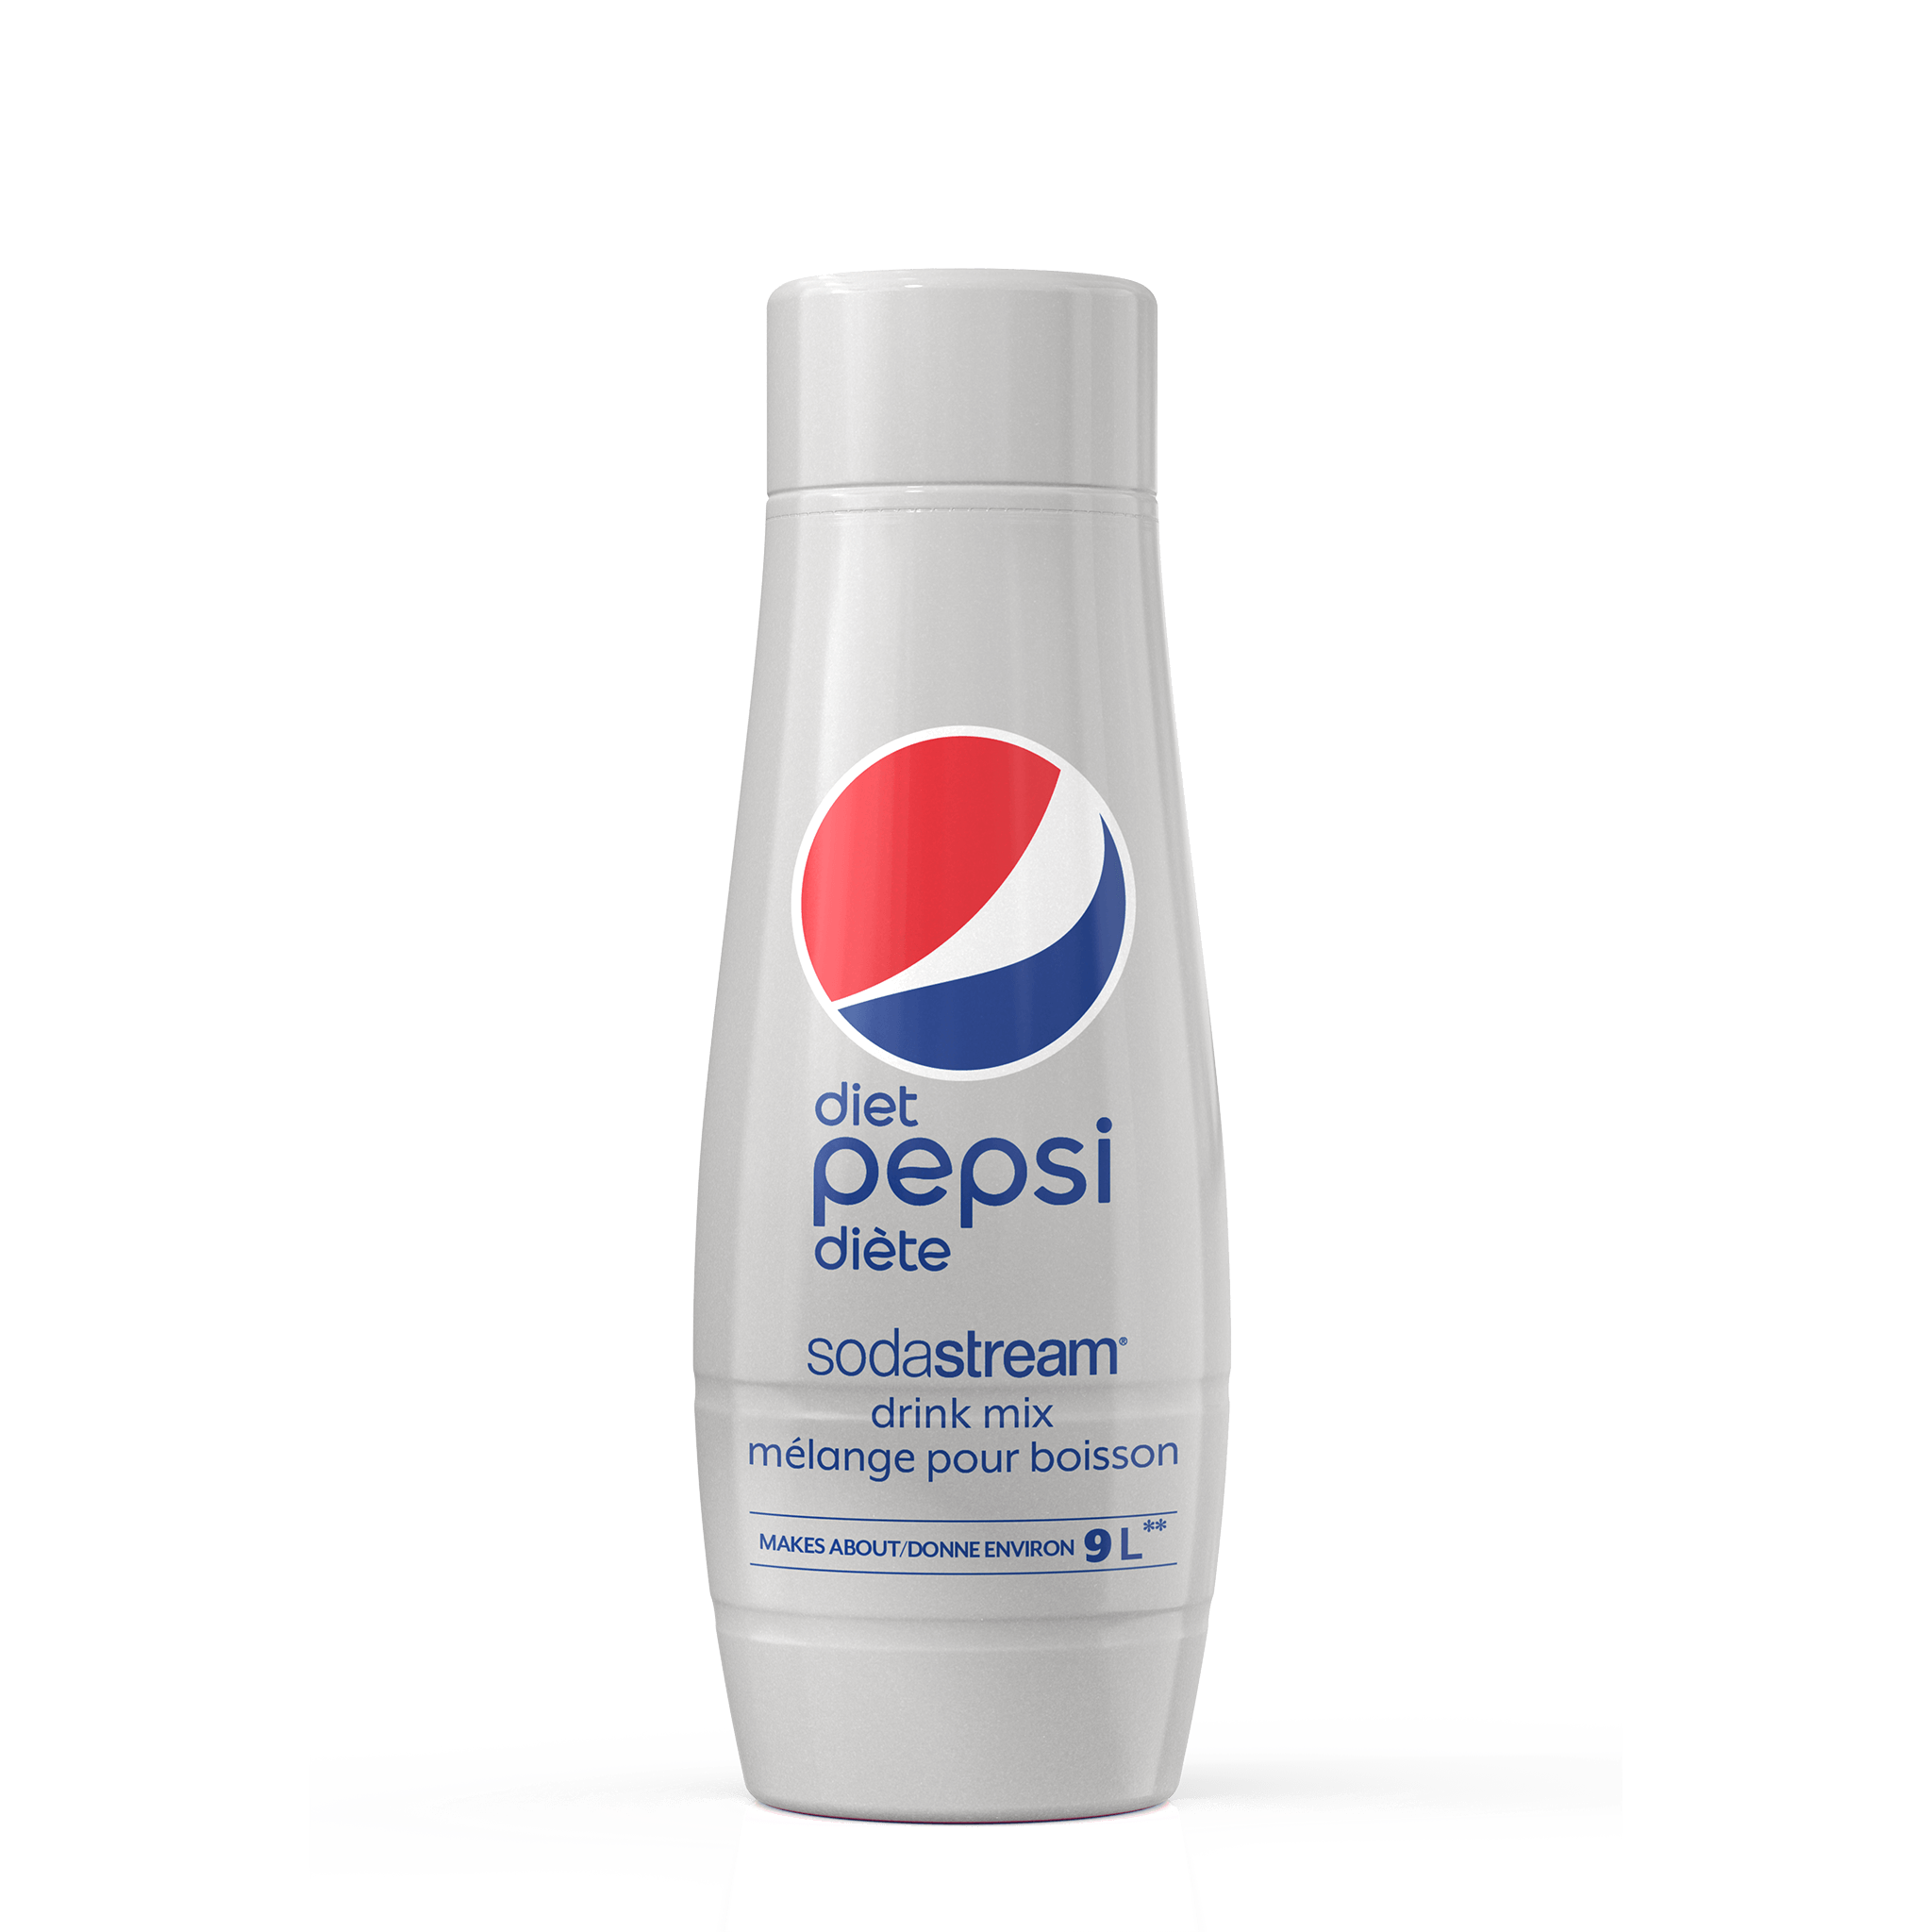 Pepsi Diète sodastream